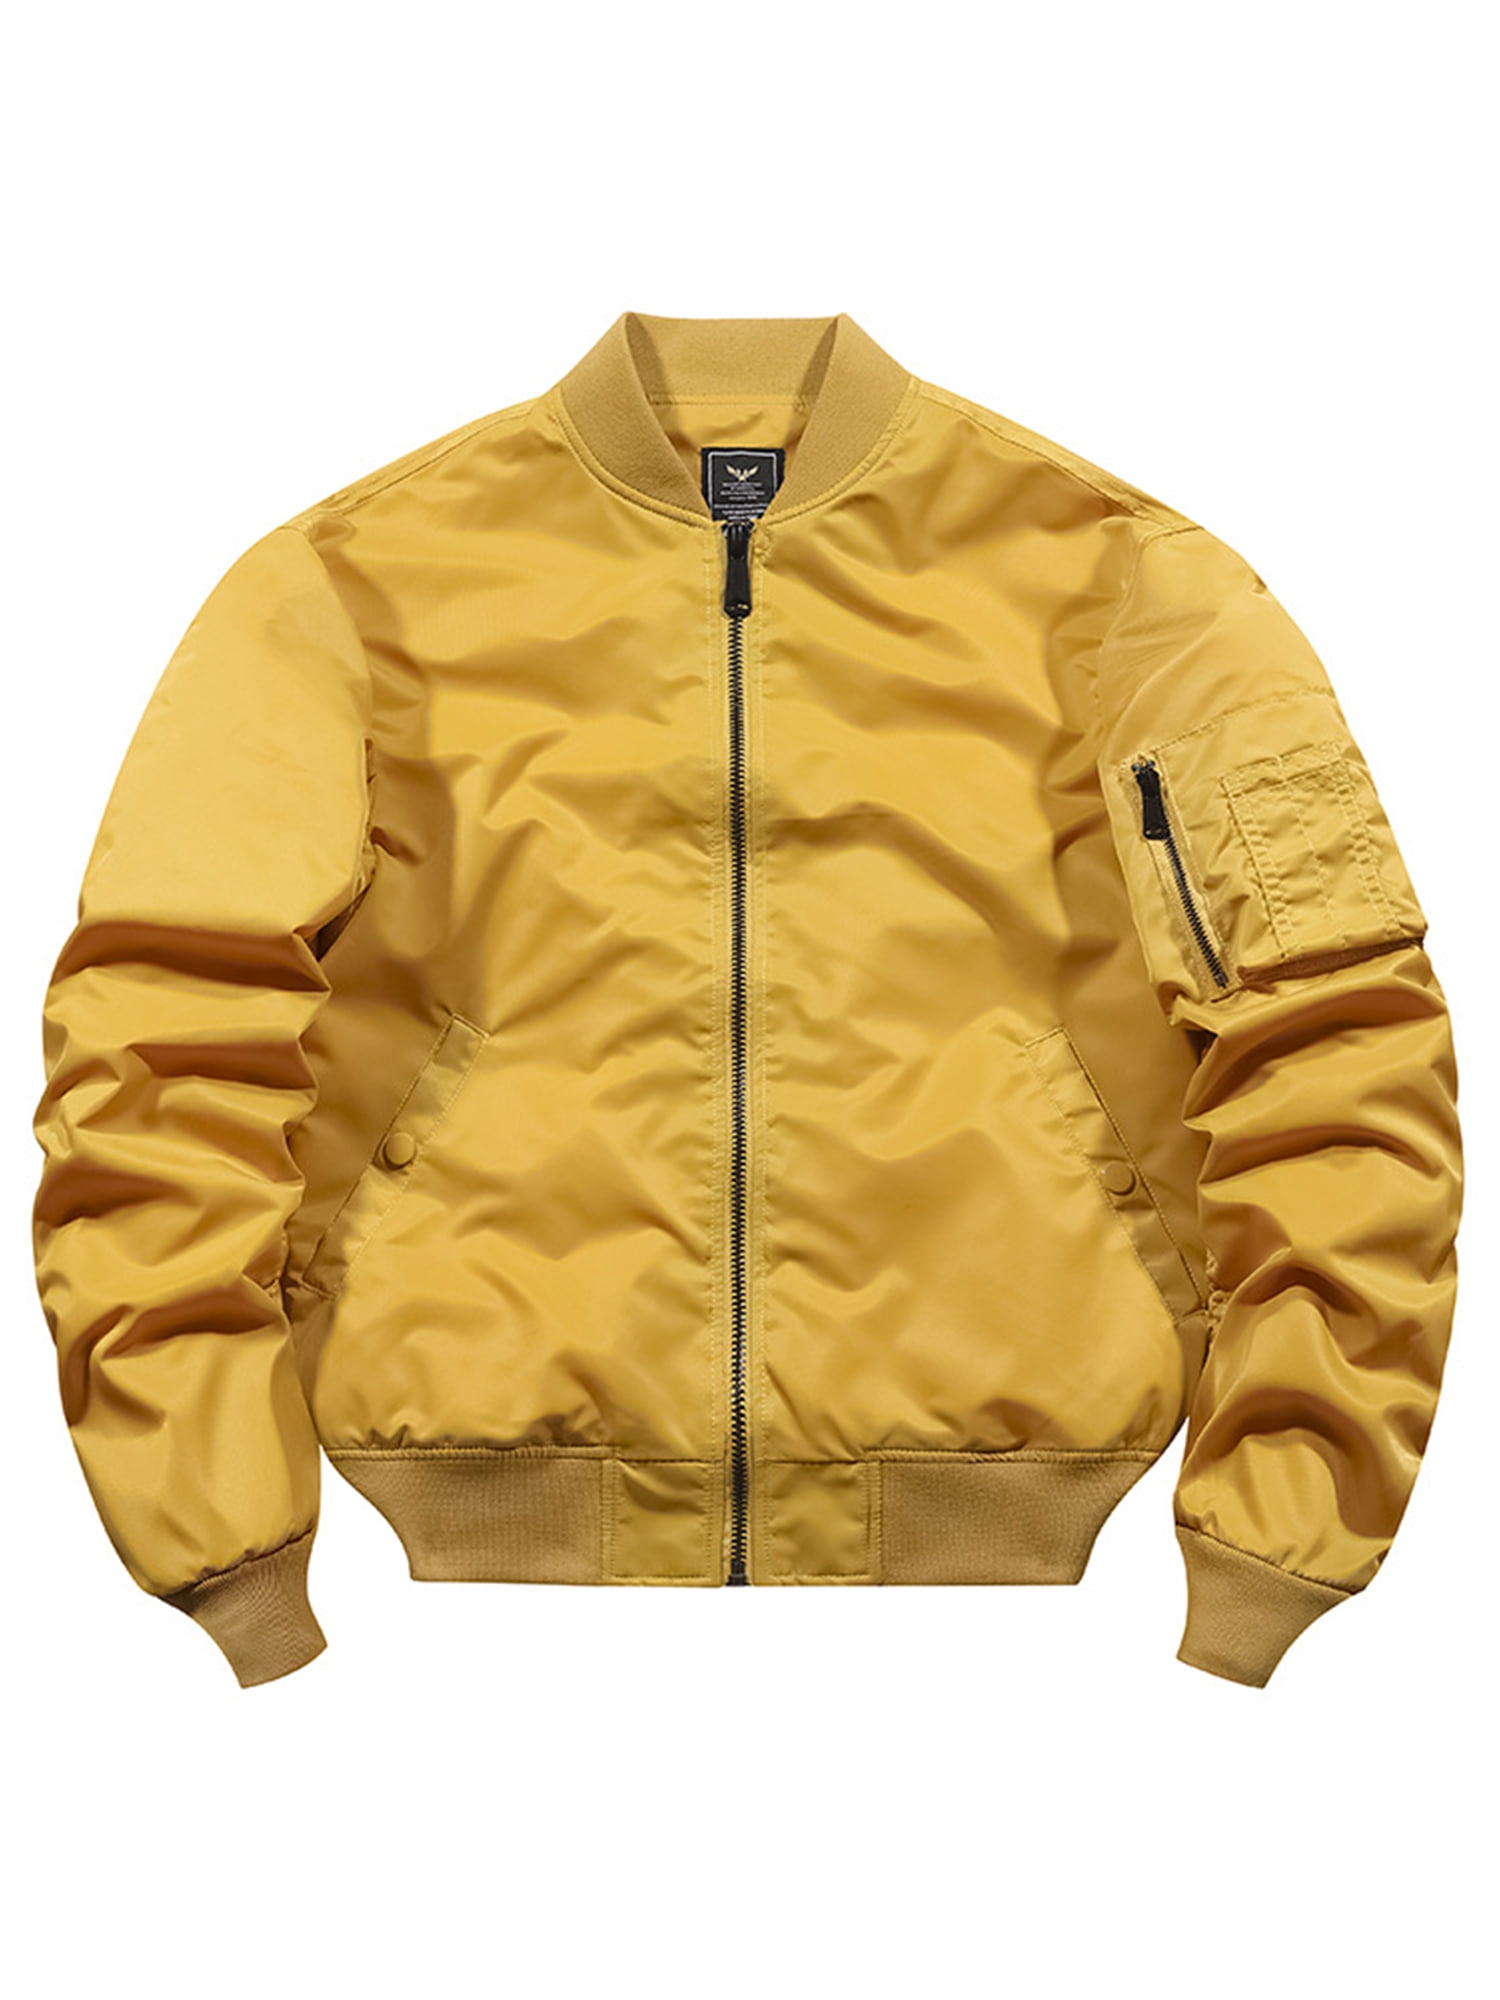 Voguele Outwear Sleeve Jacket Solid Color Jackets Outdoor Windbreaker Lightweight Yellow XL -